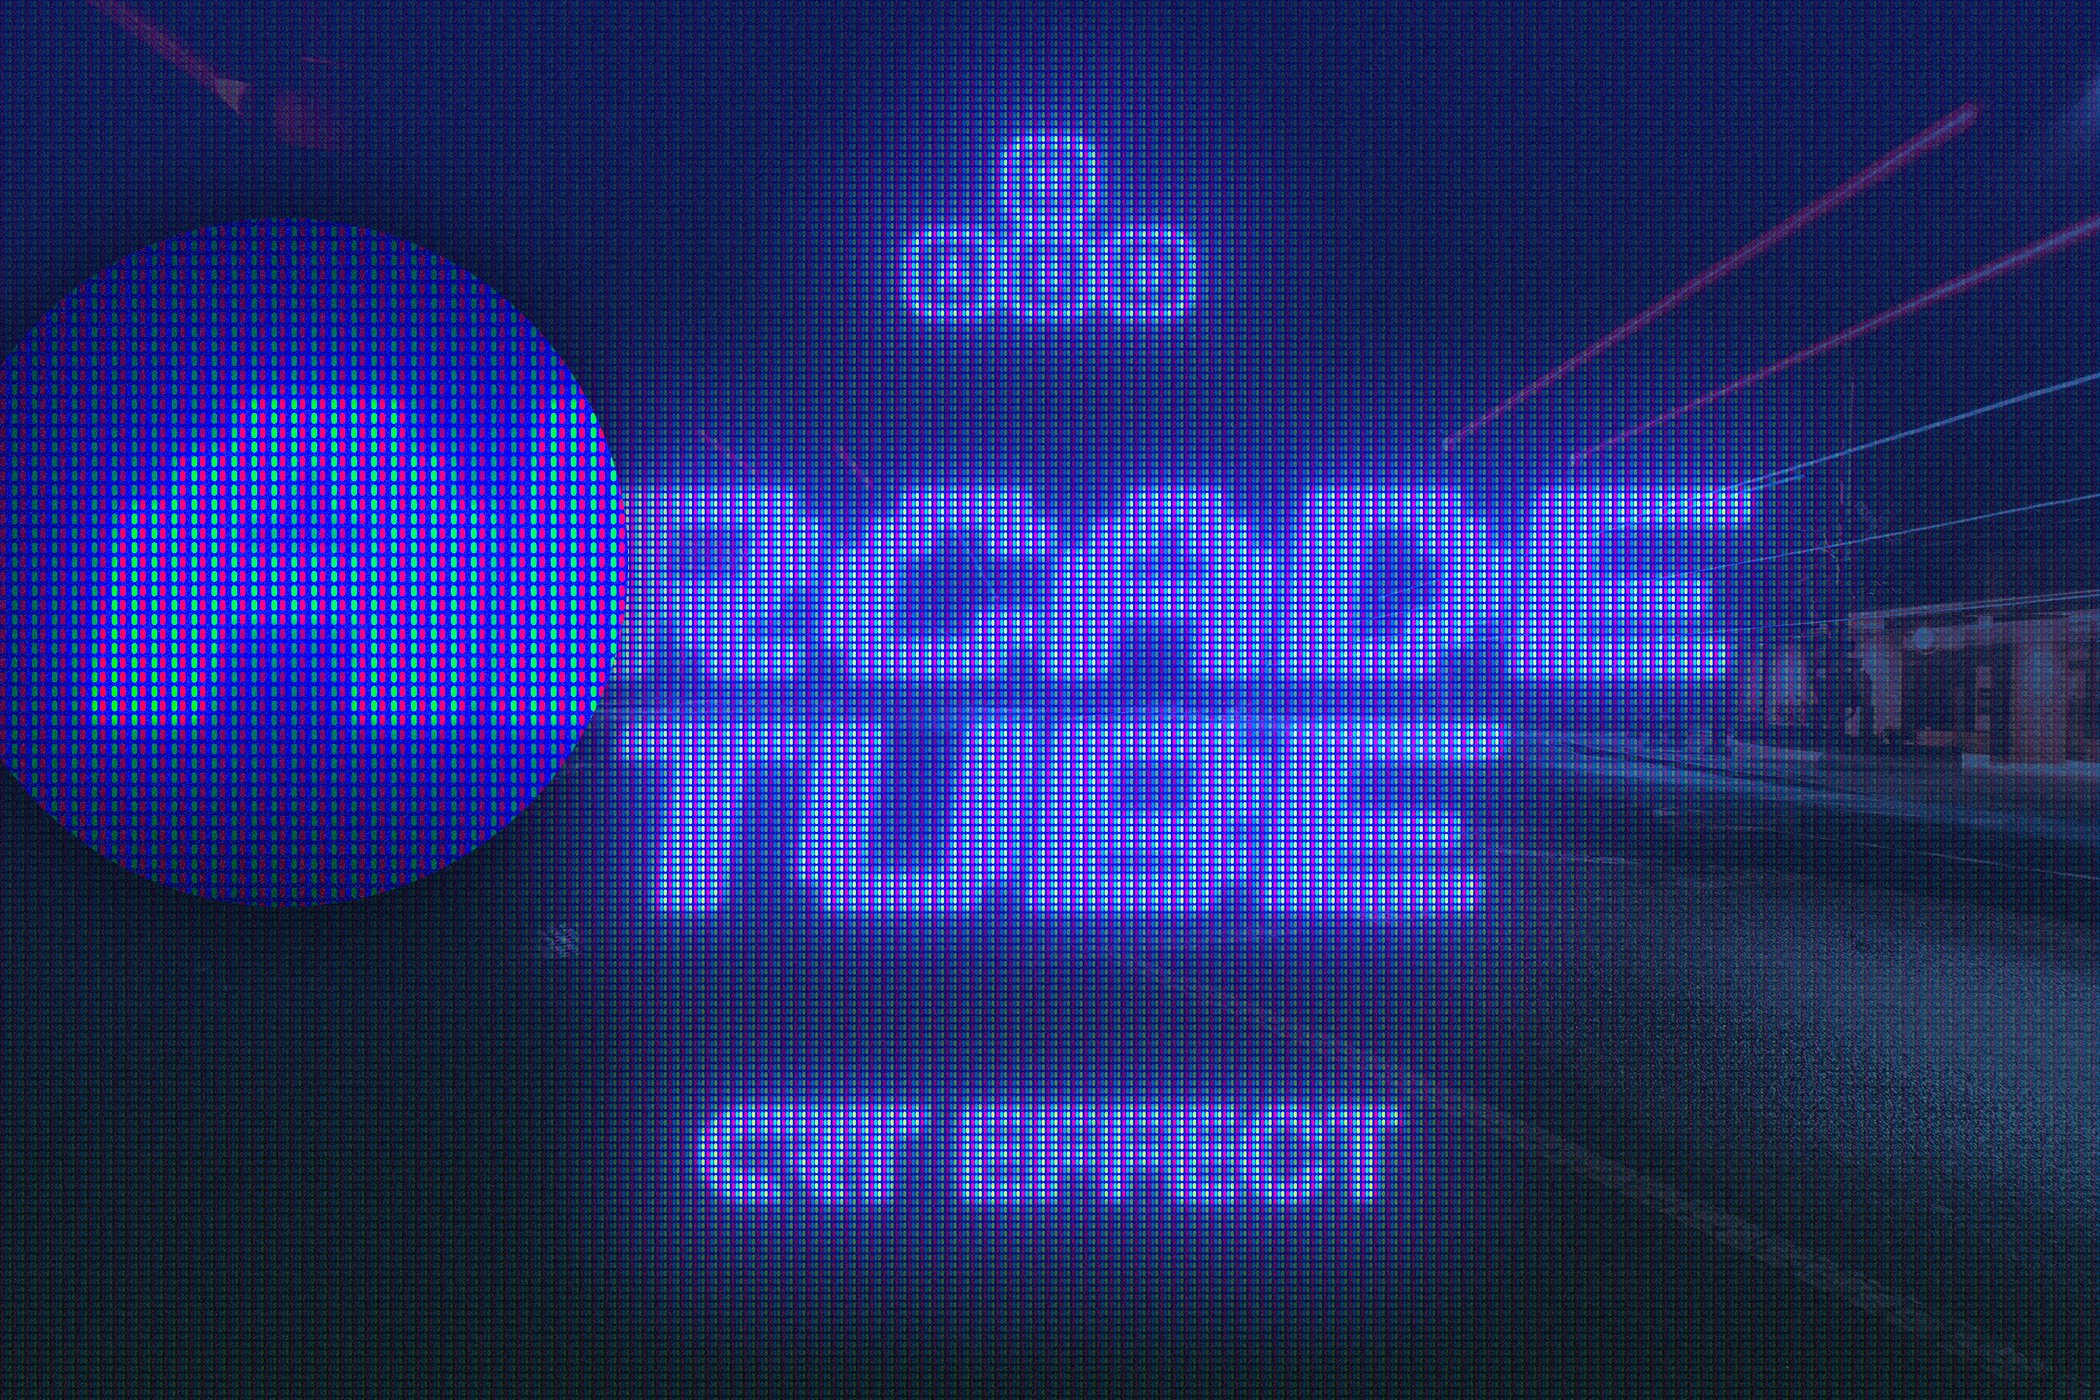 Arcade Tube CRT Effectcover image.